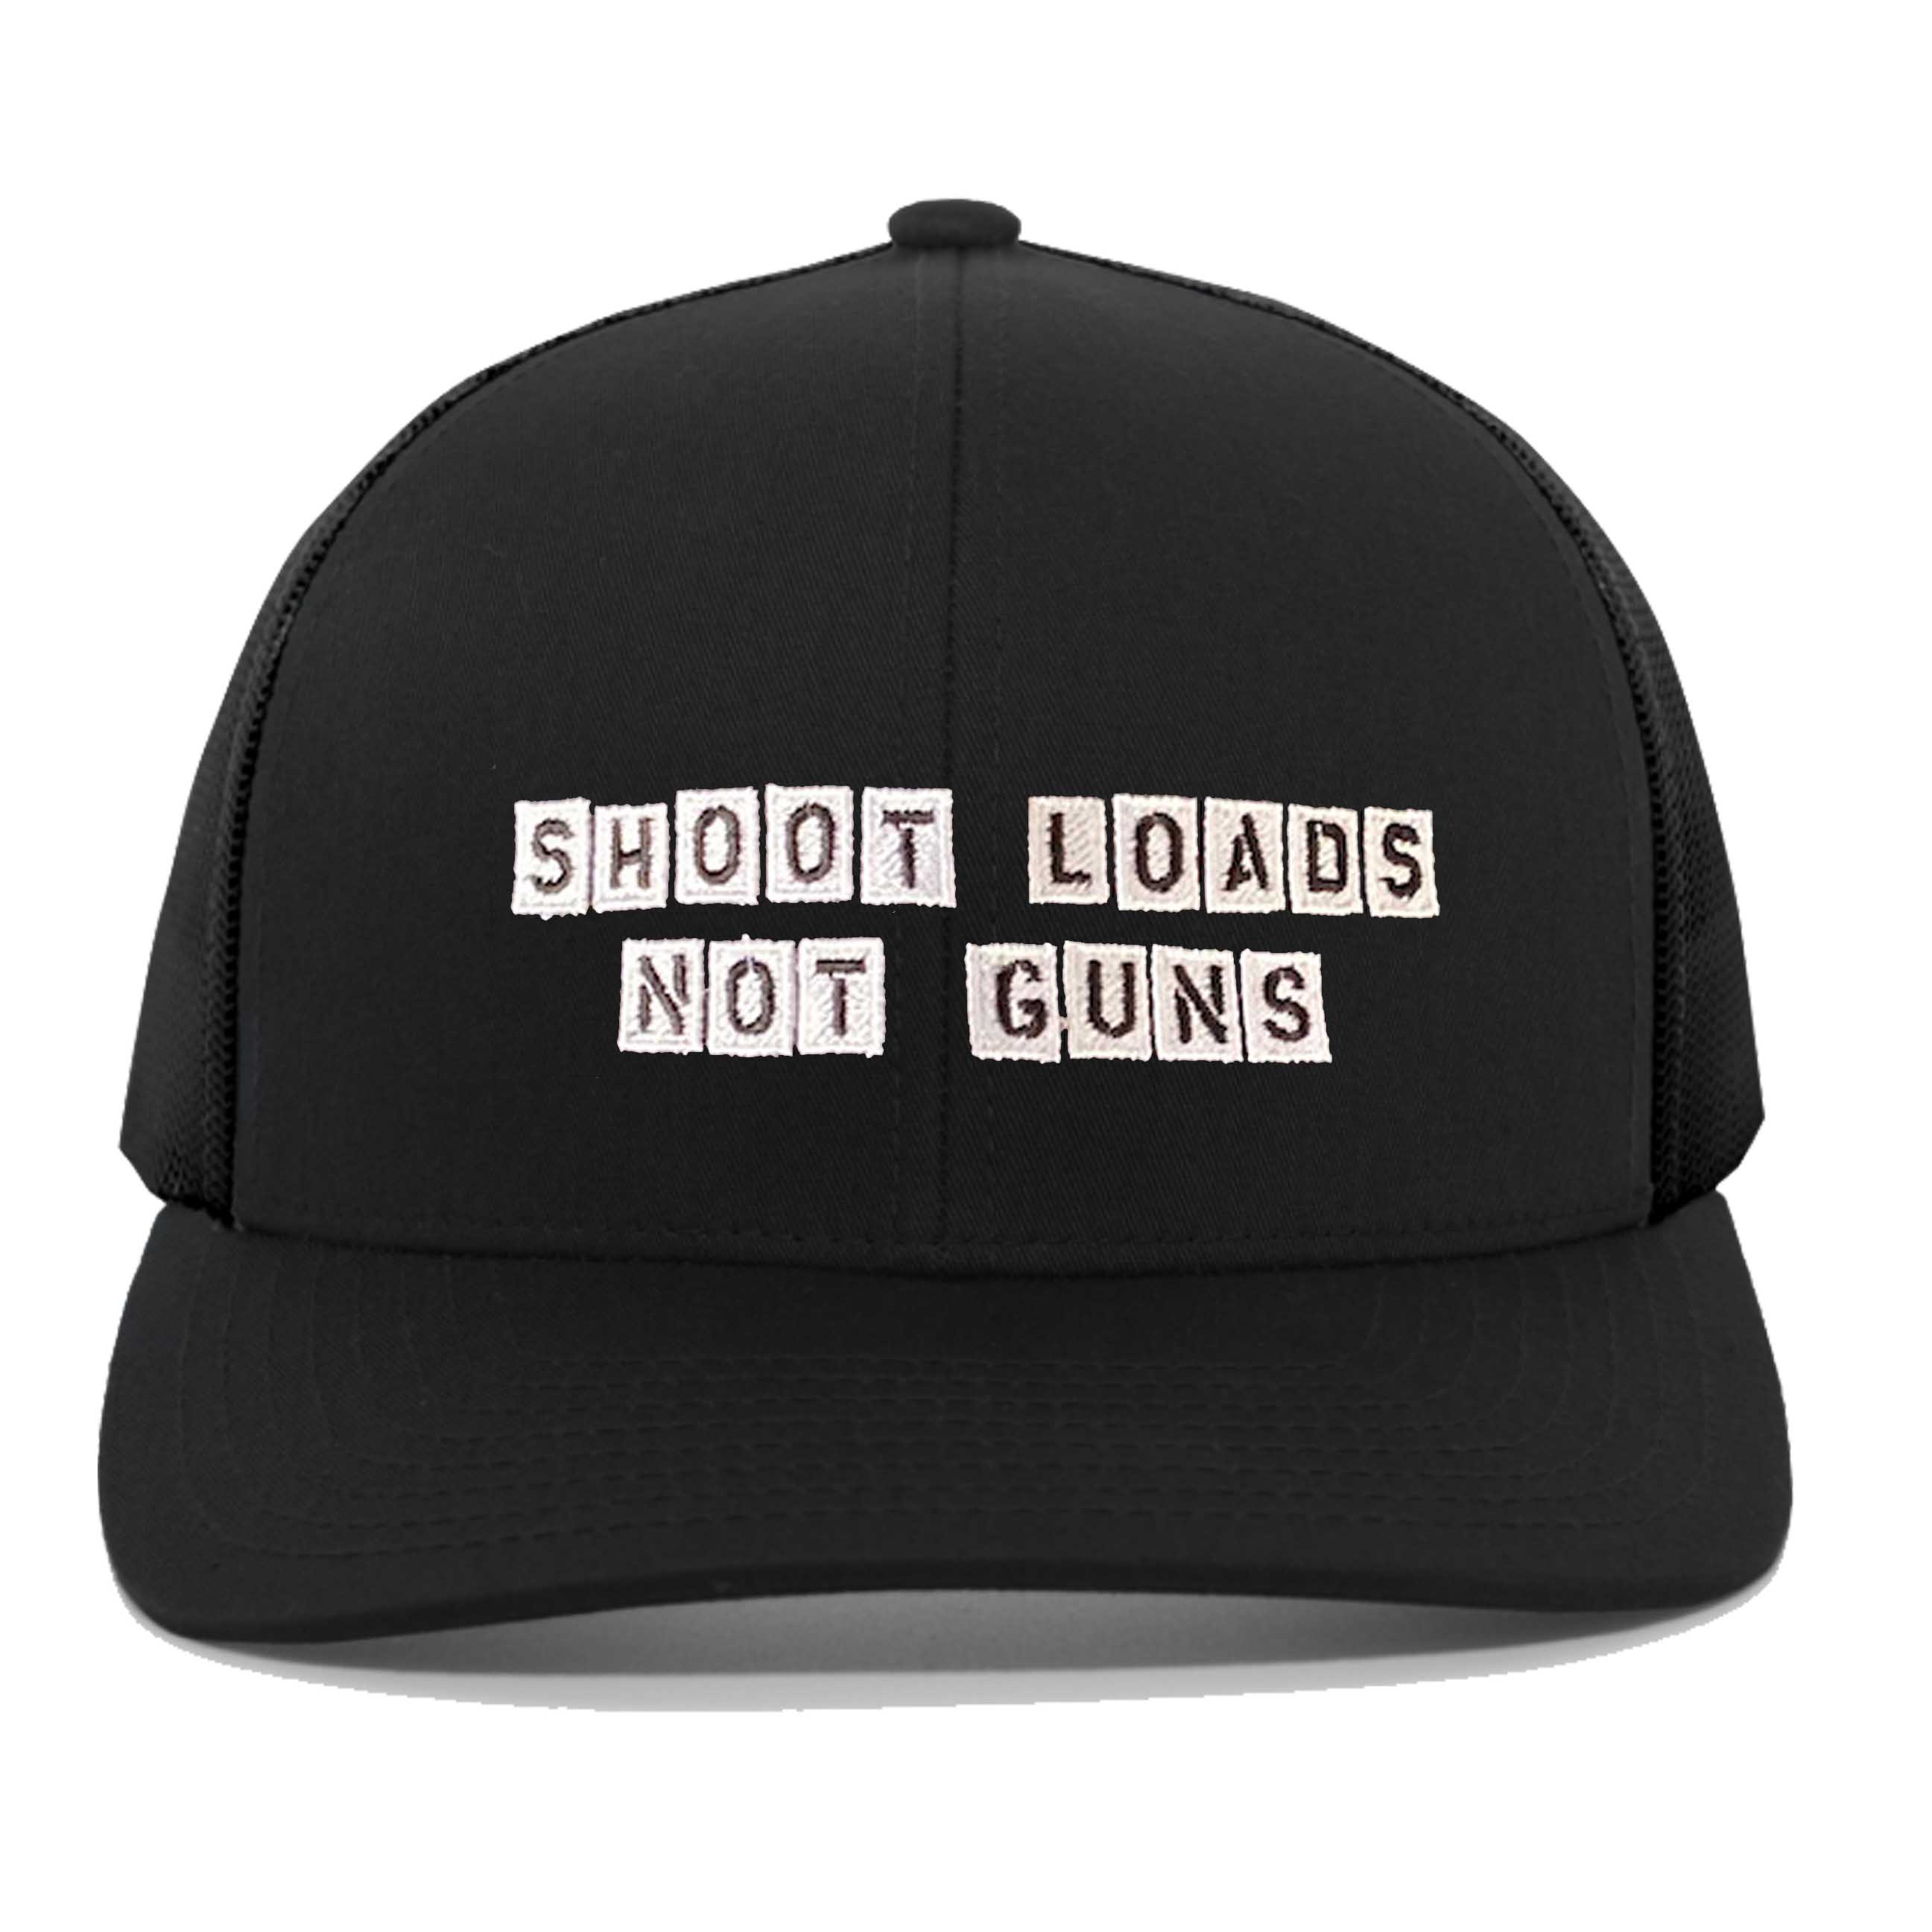 Shoot Loads Not Guns Trucker Mesh Snapback Hat Supporting Gays Against Guns